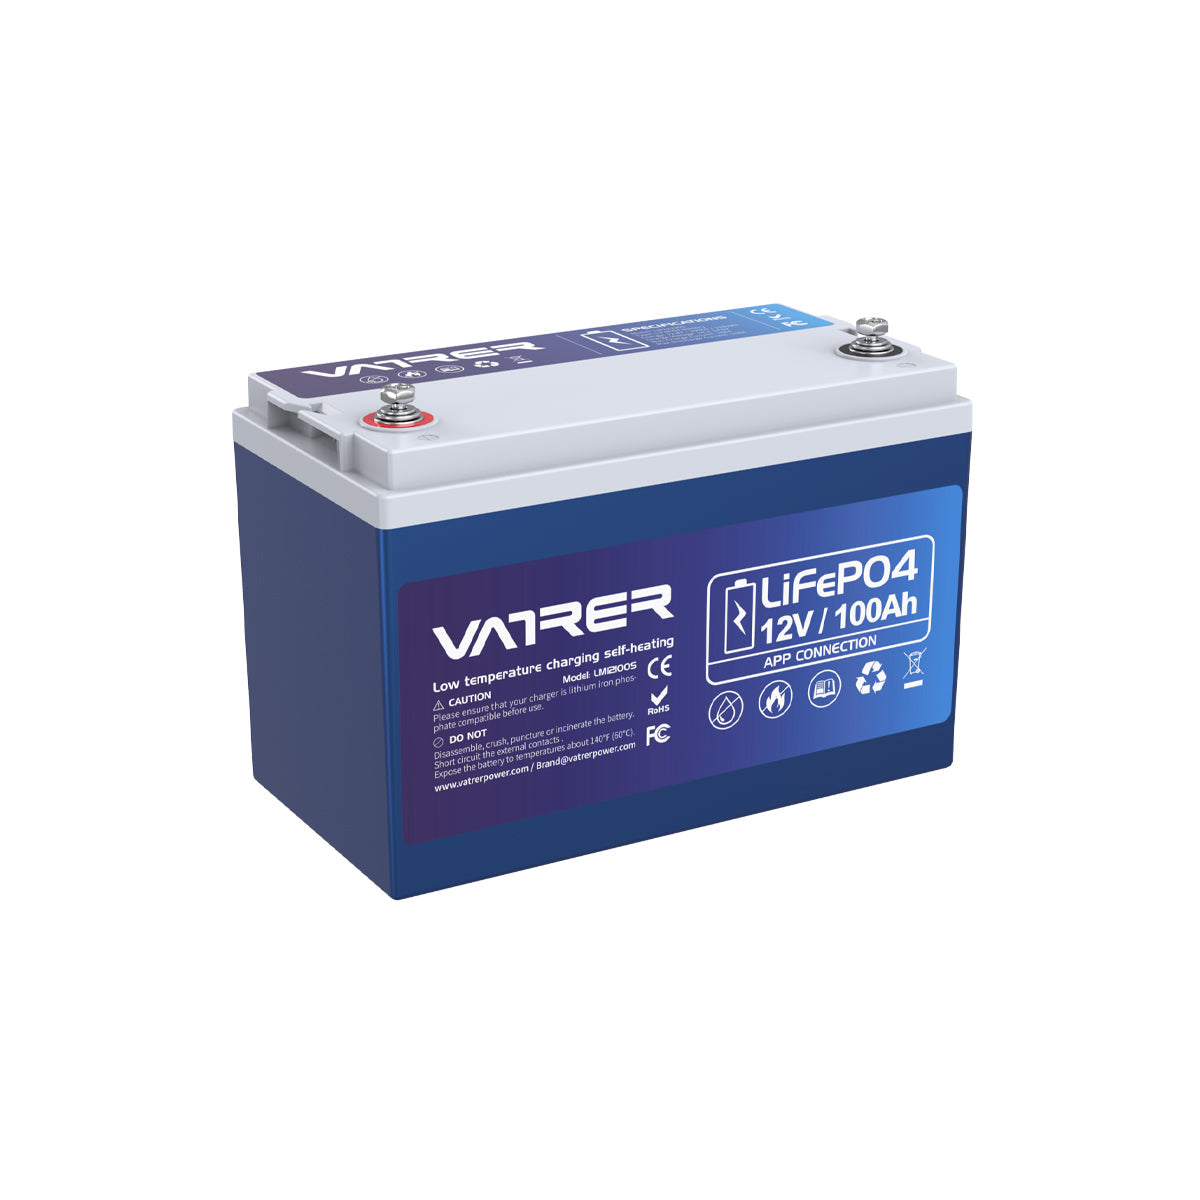 Vatrer Power LiFePO4 リン酸鉄リチウムイオンバッテリー-Vatrer